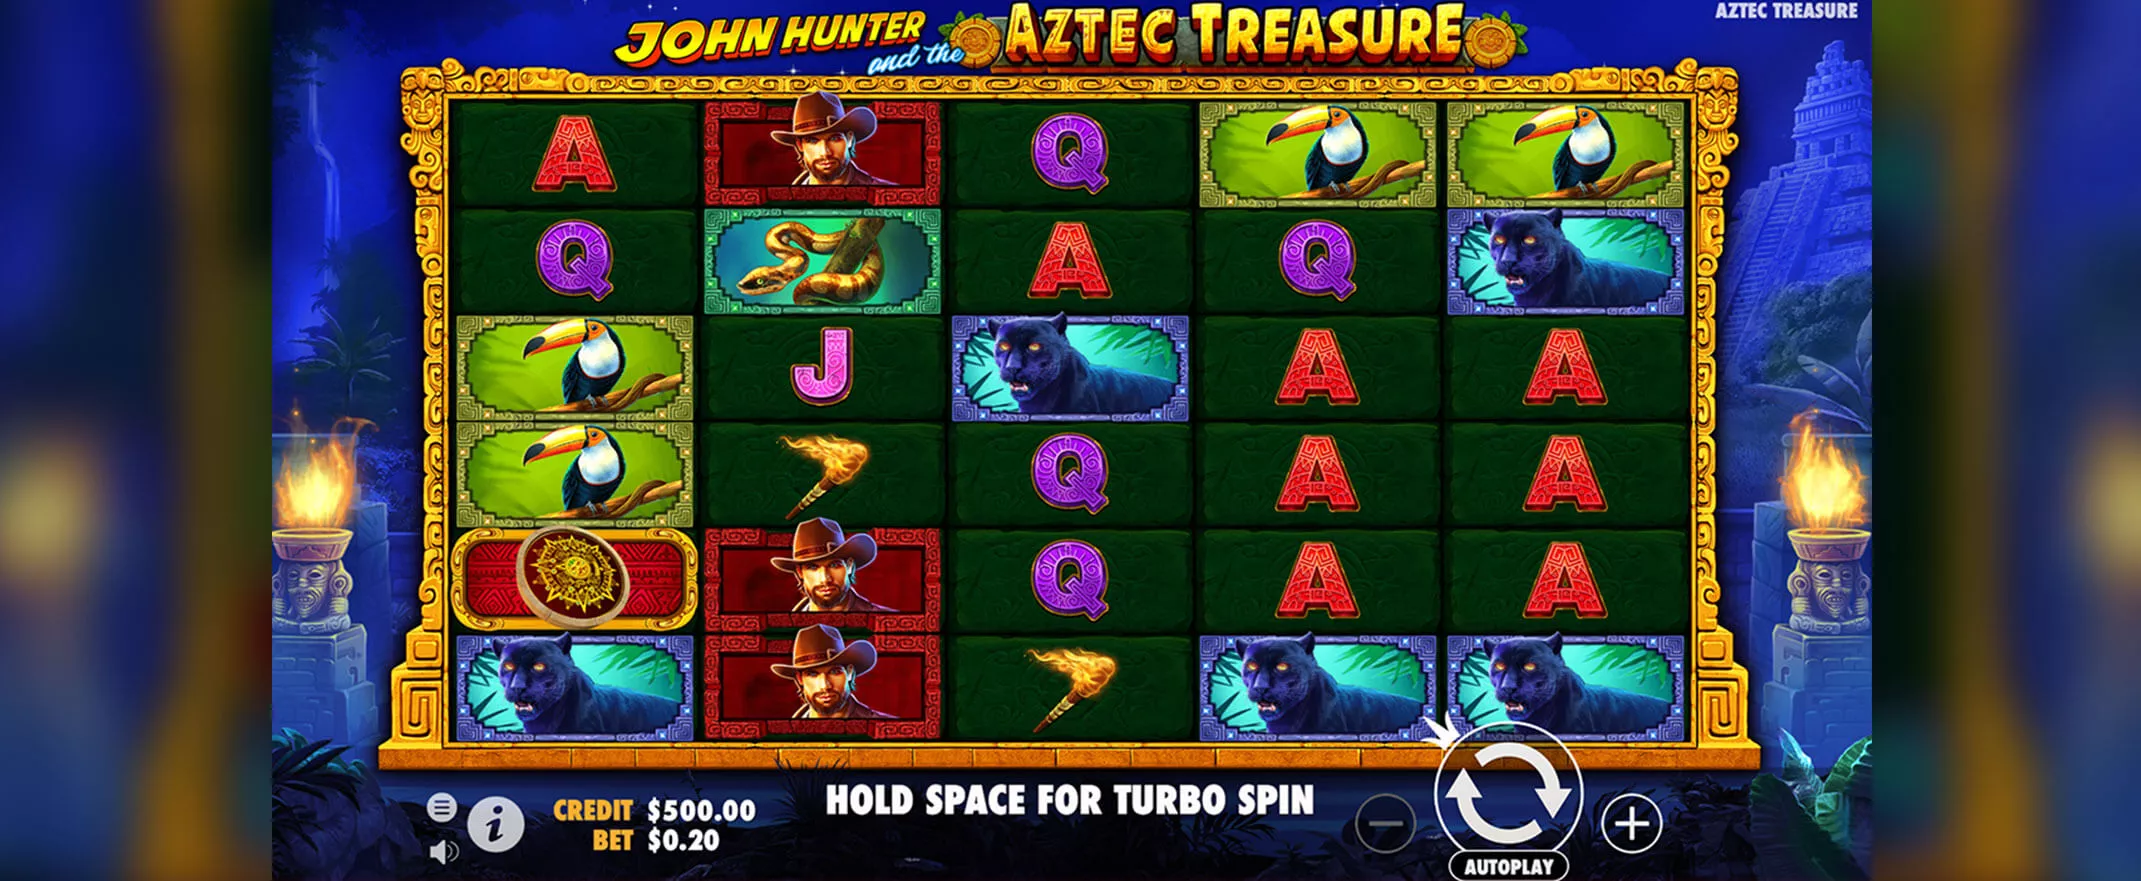 John Hunter and the Aztec Treasure slot from Pragmatic Play